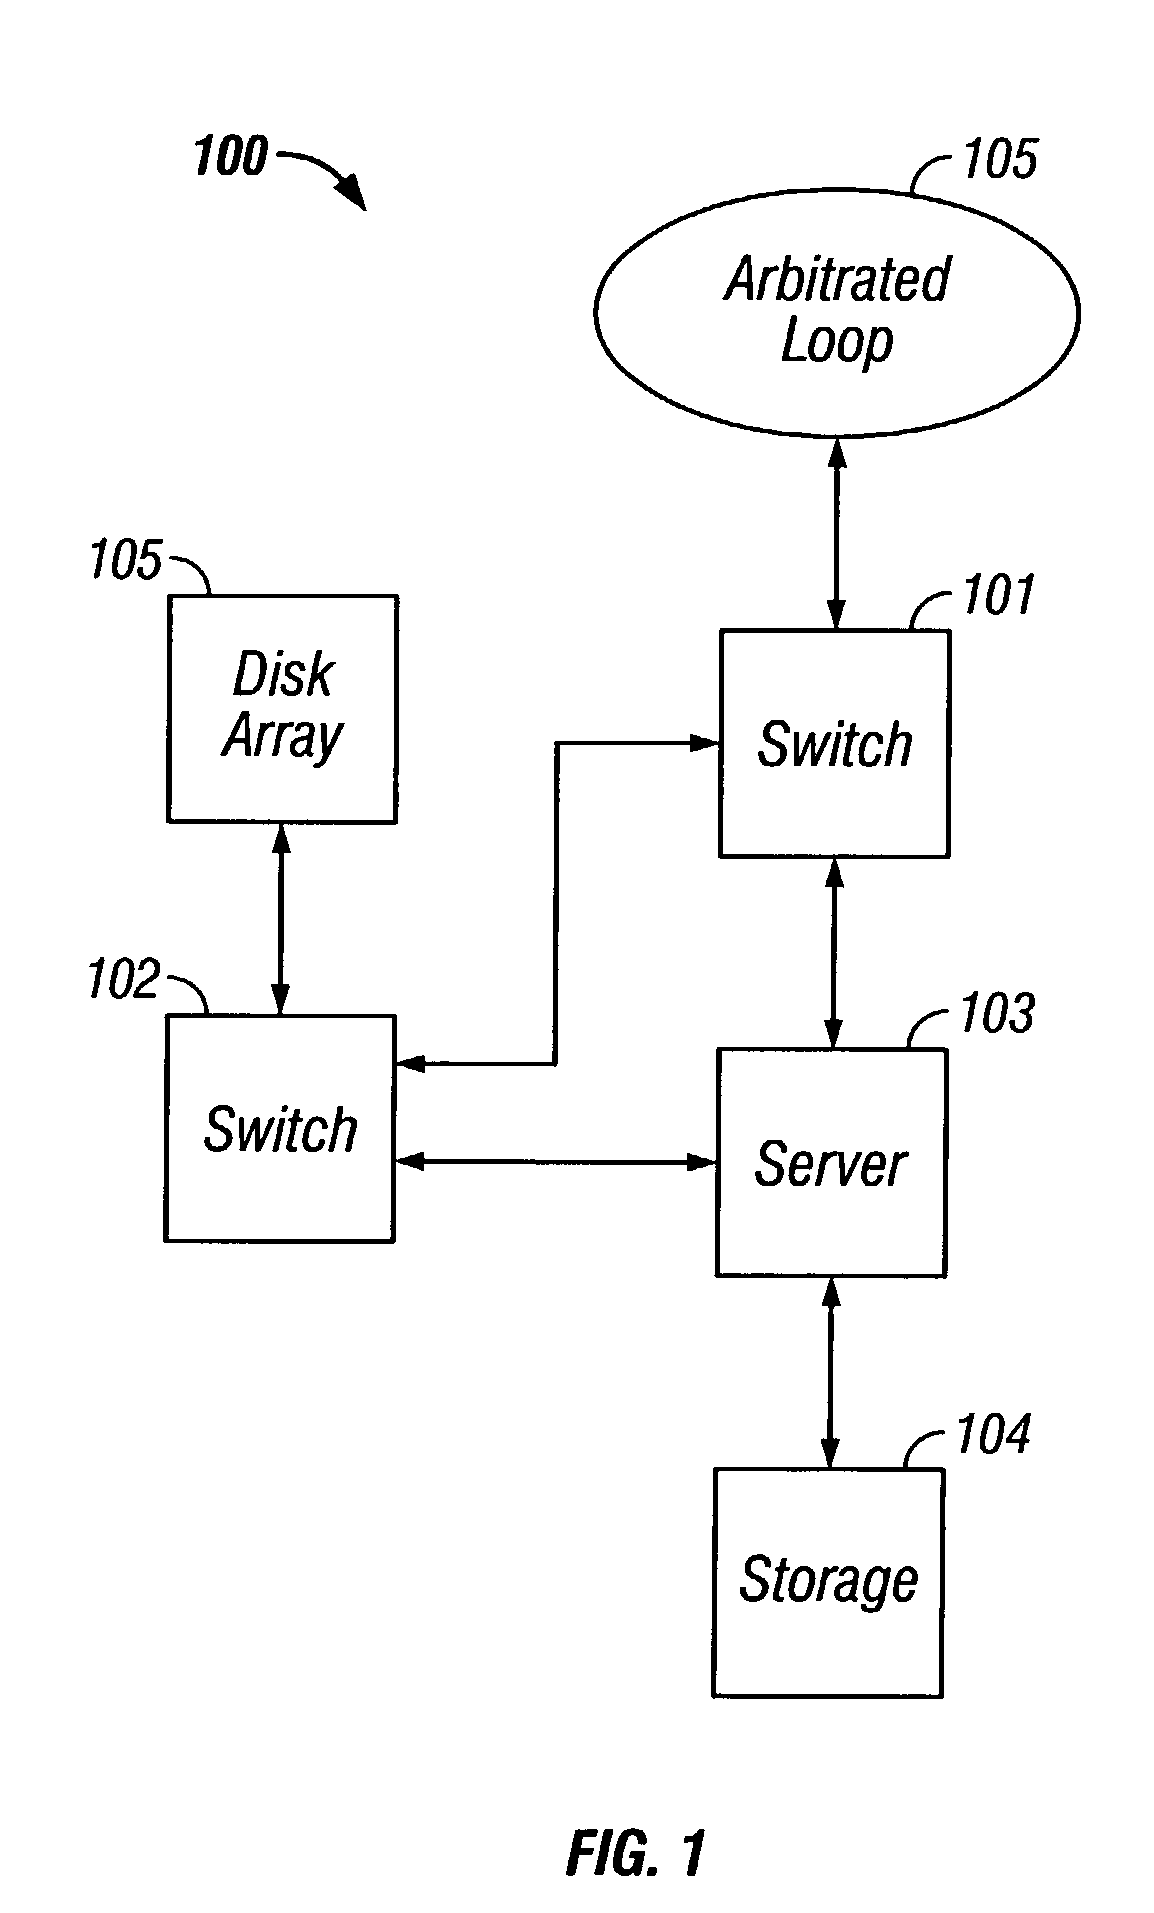 Zone management in a multi-module fibre channel switch